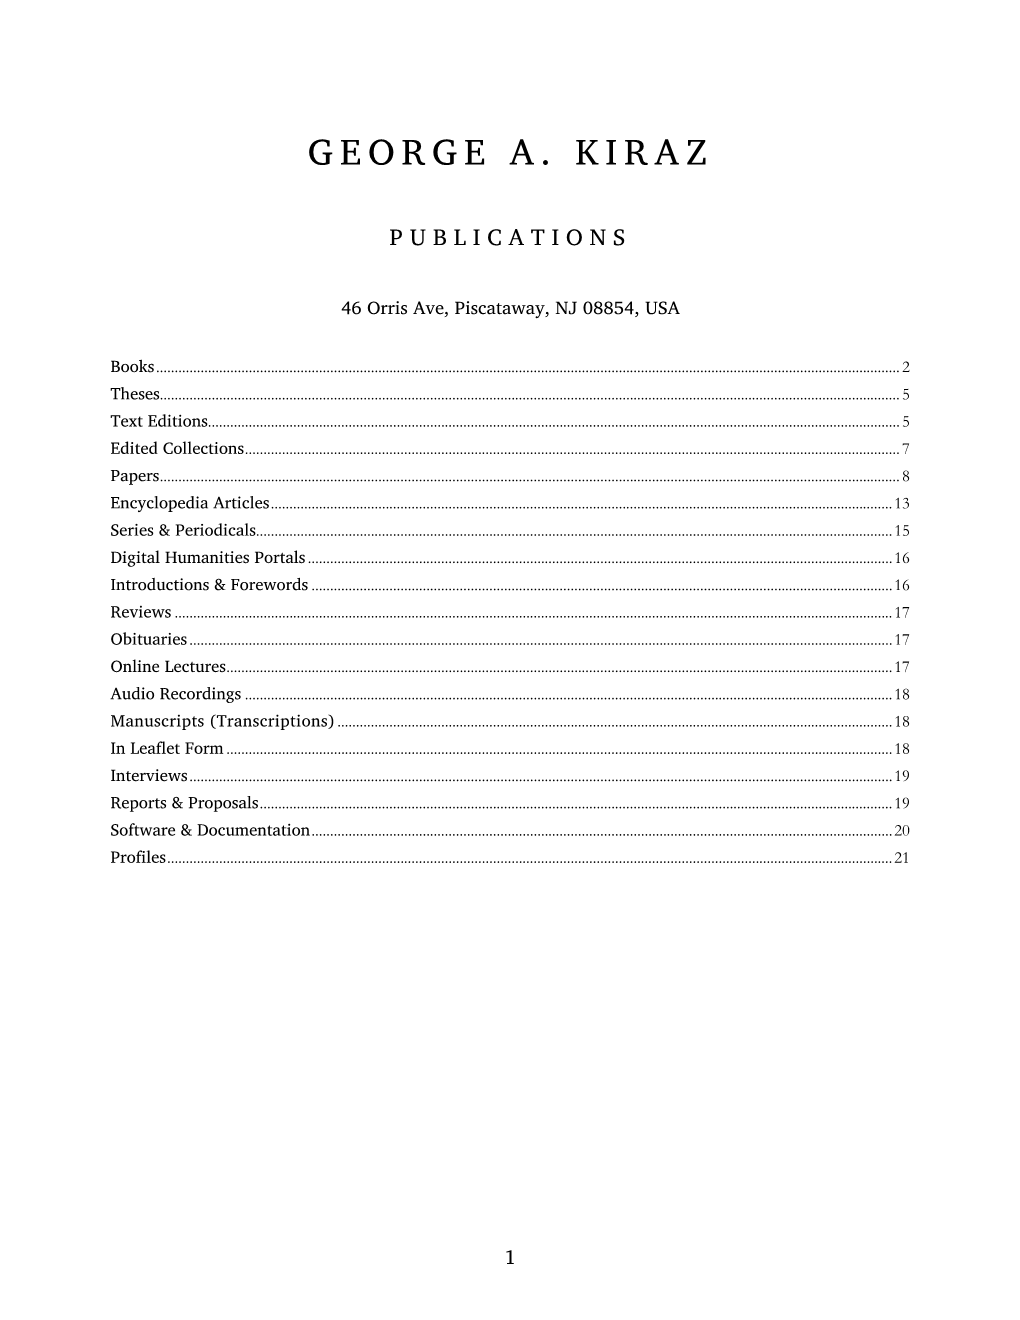 George A. Kiraz